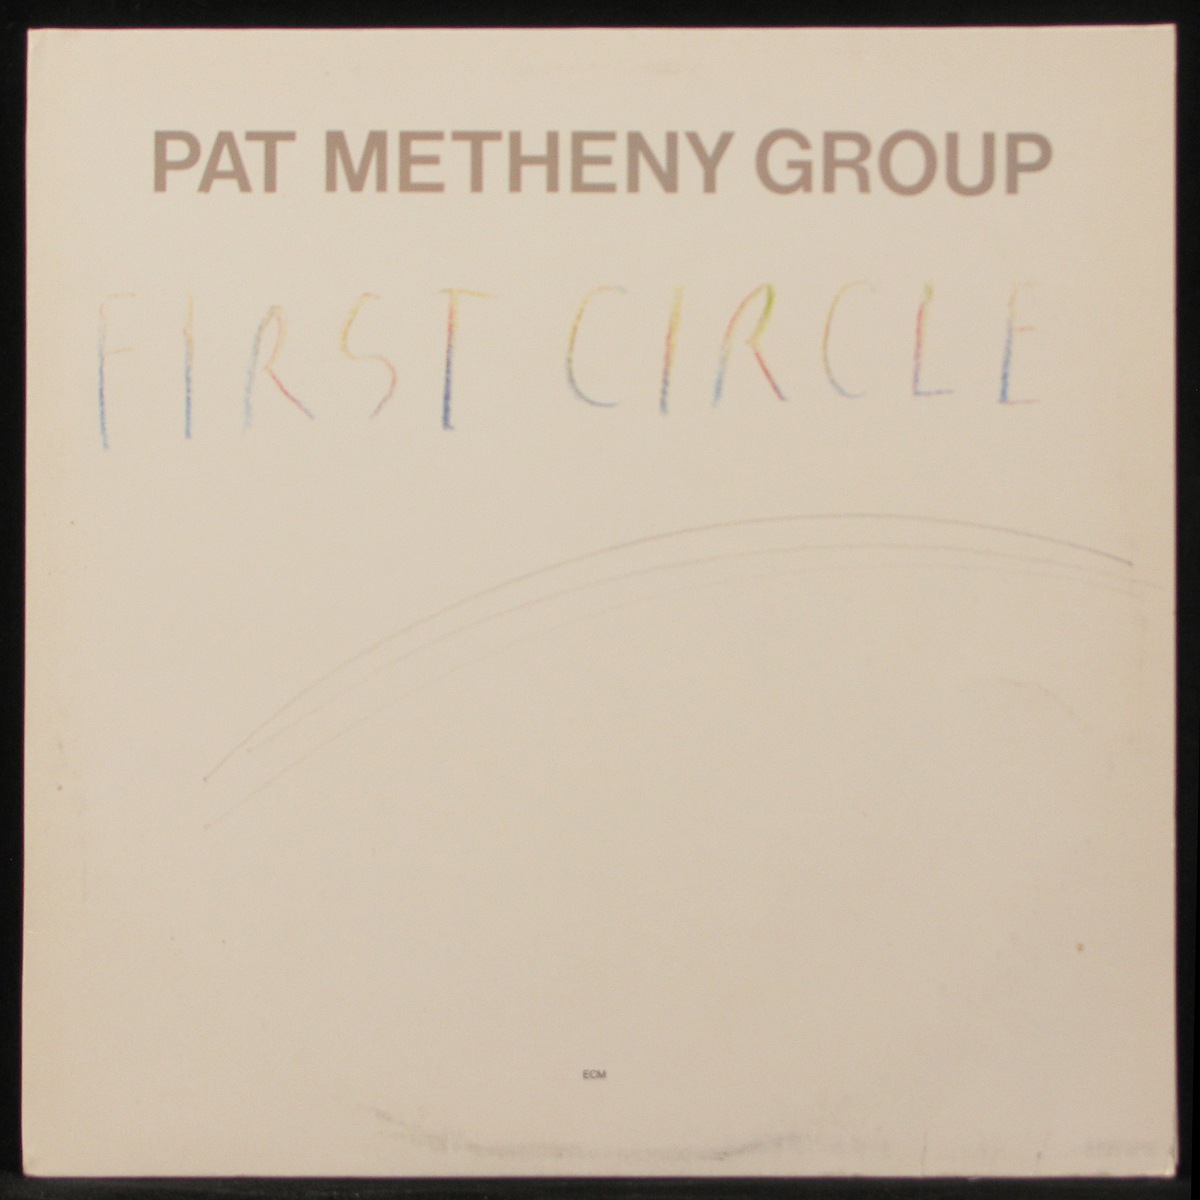 LP Pat Metheny Group — First Circle фото